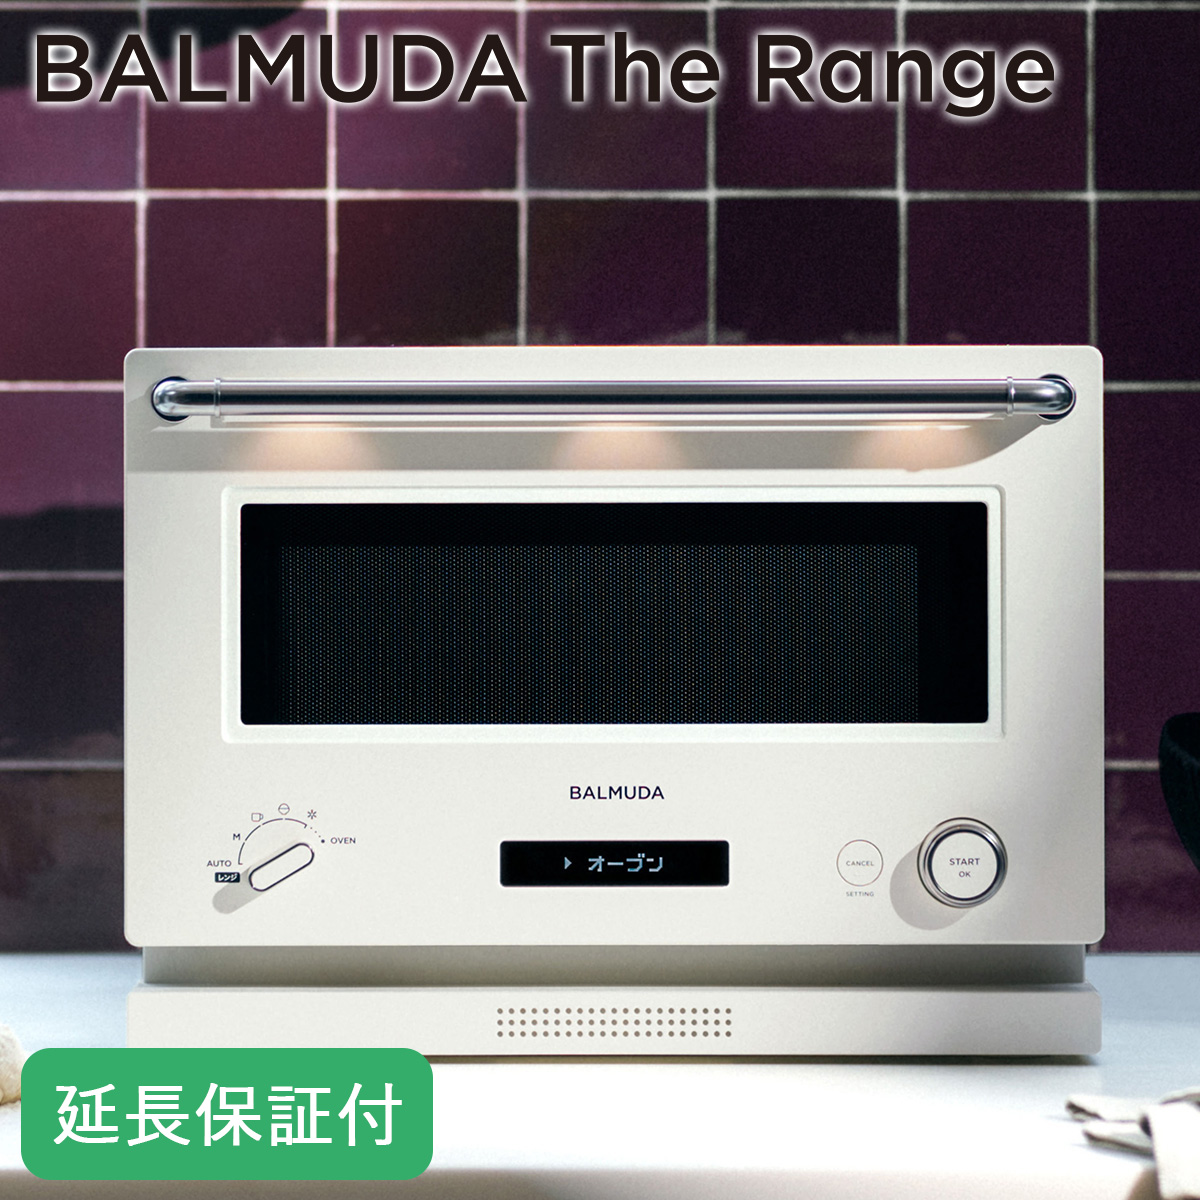 BALMUDA The Range 2023発売 k09a-wh - 電子レンジ/オーブン